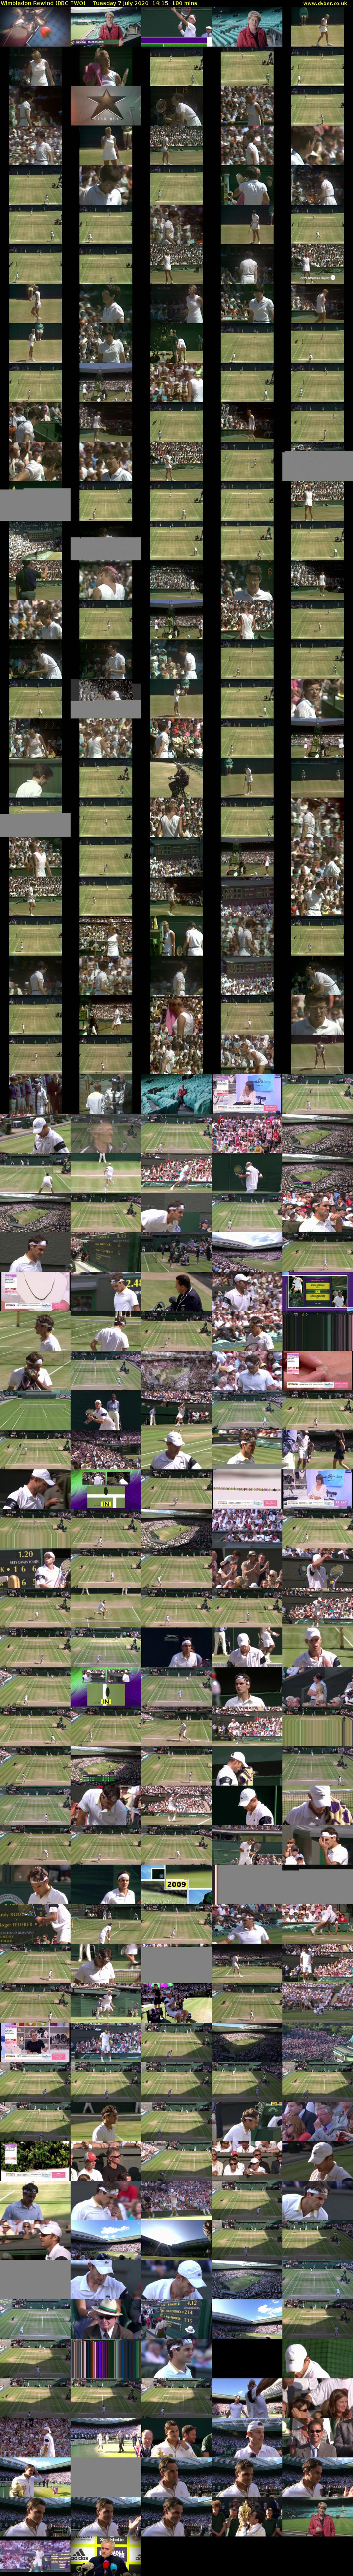 Wimbledon Rewind (BBC TWO) Tuesday 7 July 2020 14:15 - 17:15